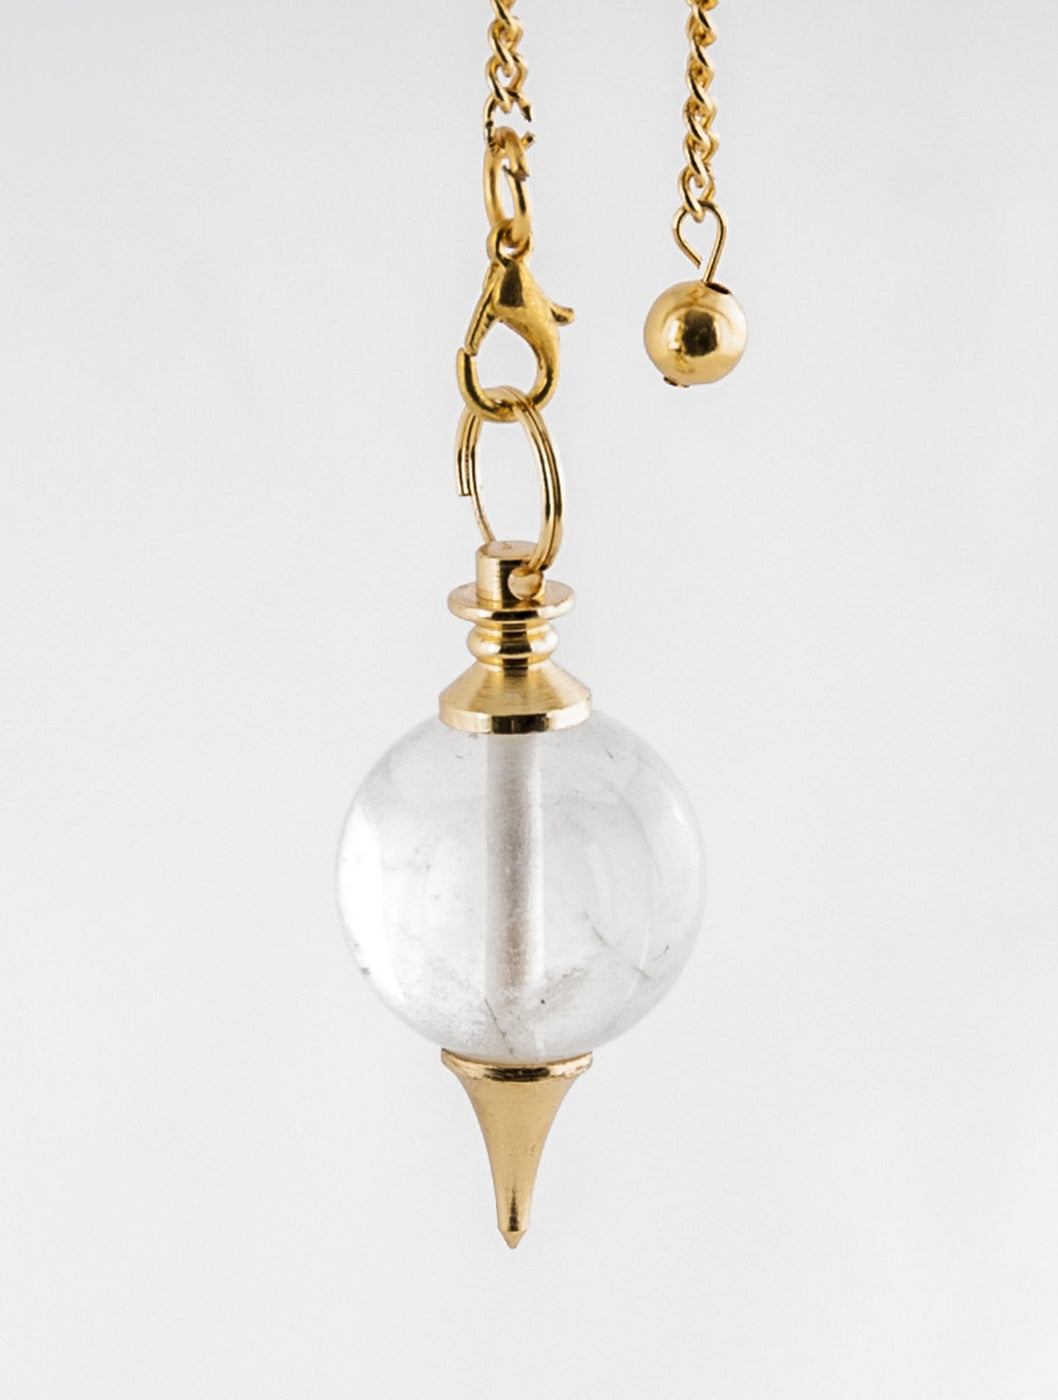 Pendulum with Crystal ball